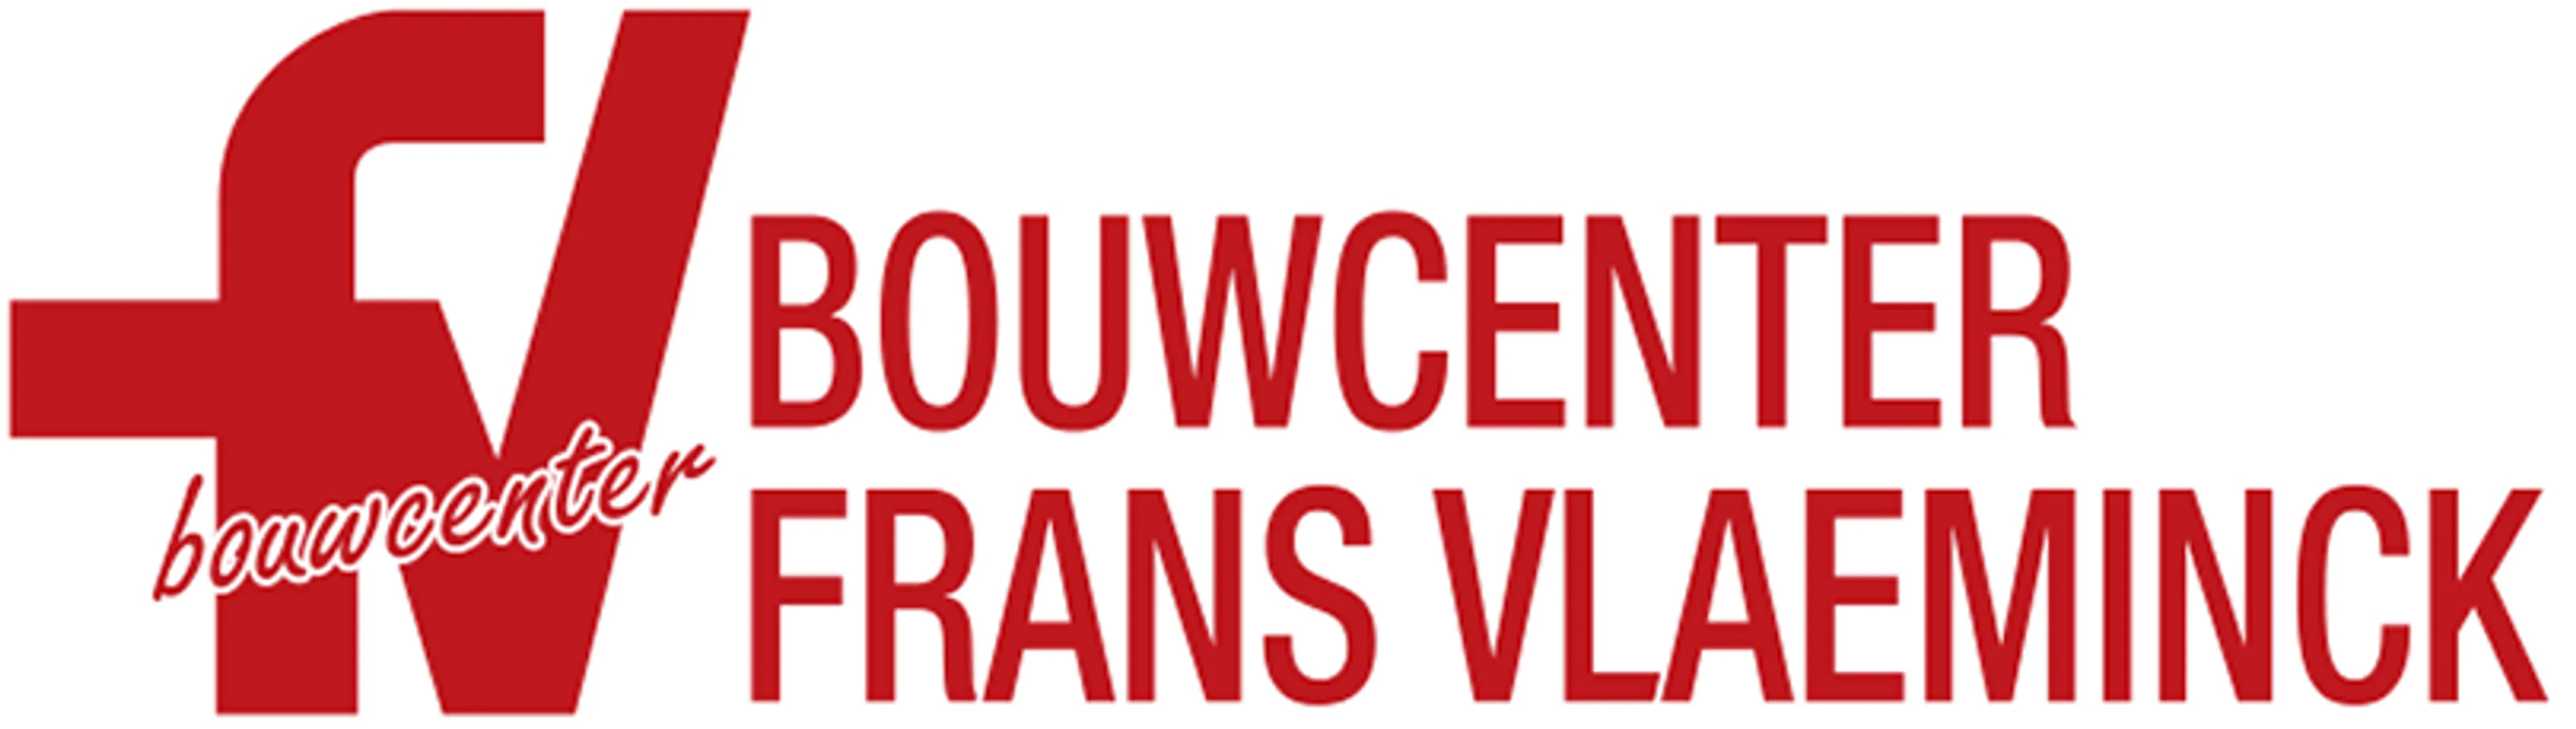 BOUWCENTER FRANS VLAEMINCK logo